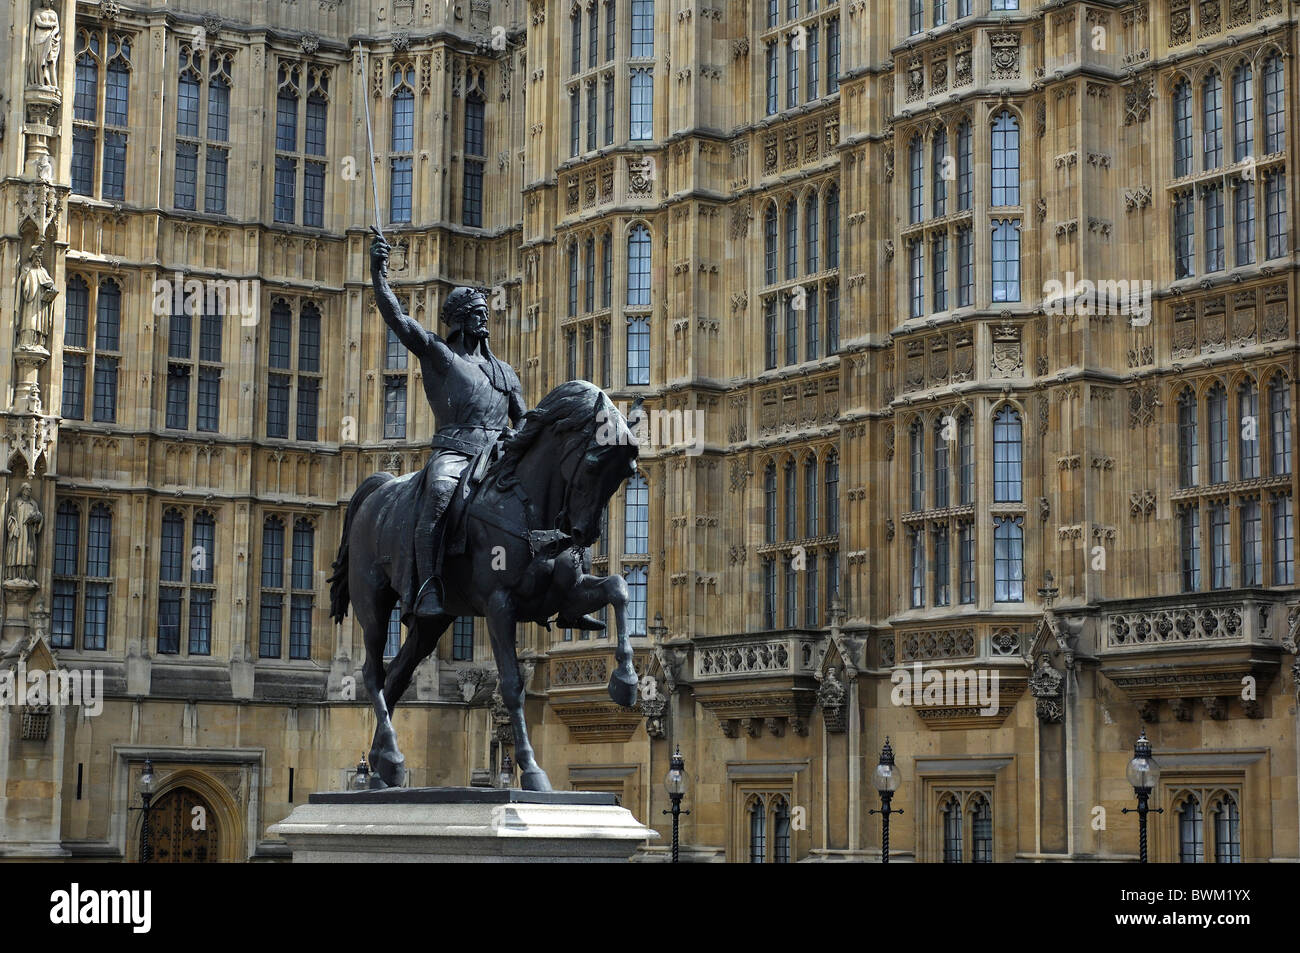 UK London Richard Lionheart Statue at Parliament Westminster Great Britain Europe England horse sculpture a Stock Photo